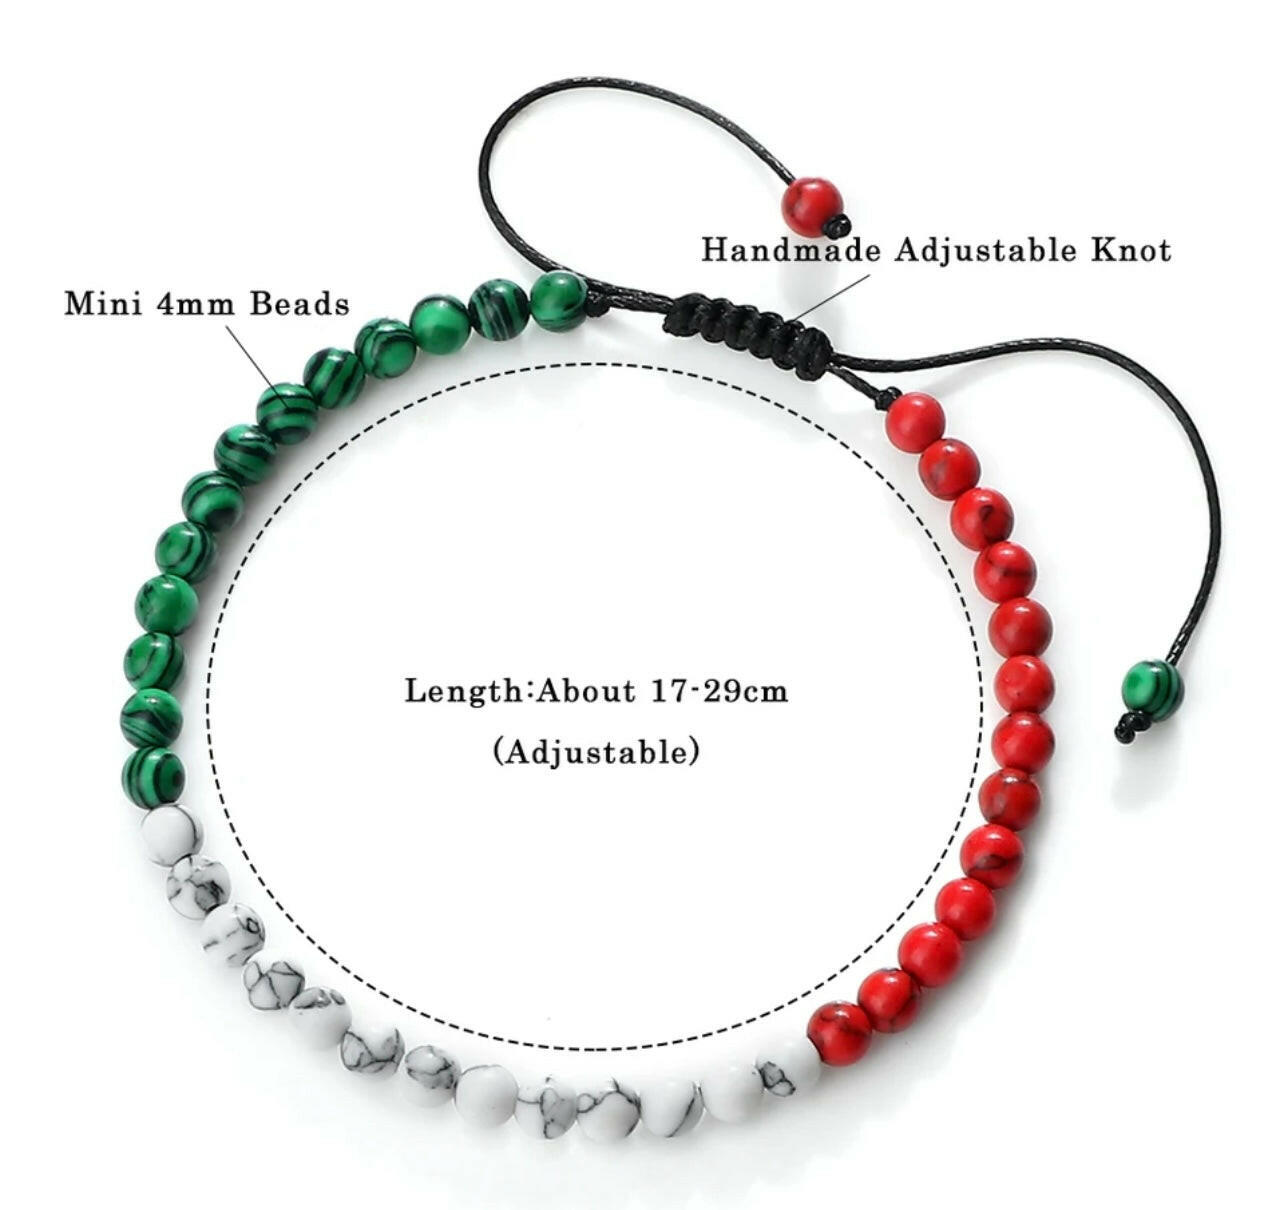 1 Italian beaded bracelet - Adjustable.